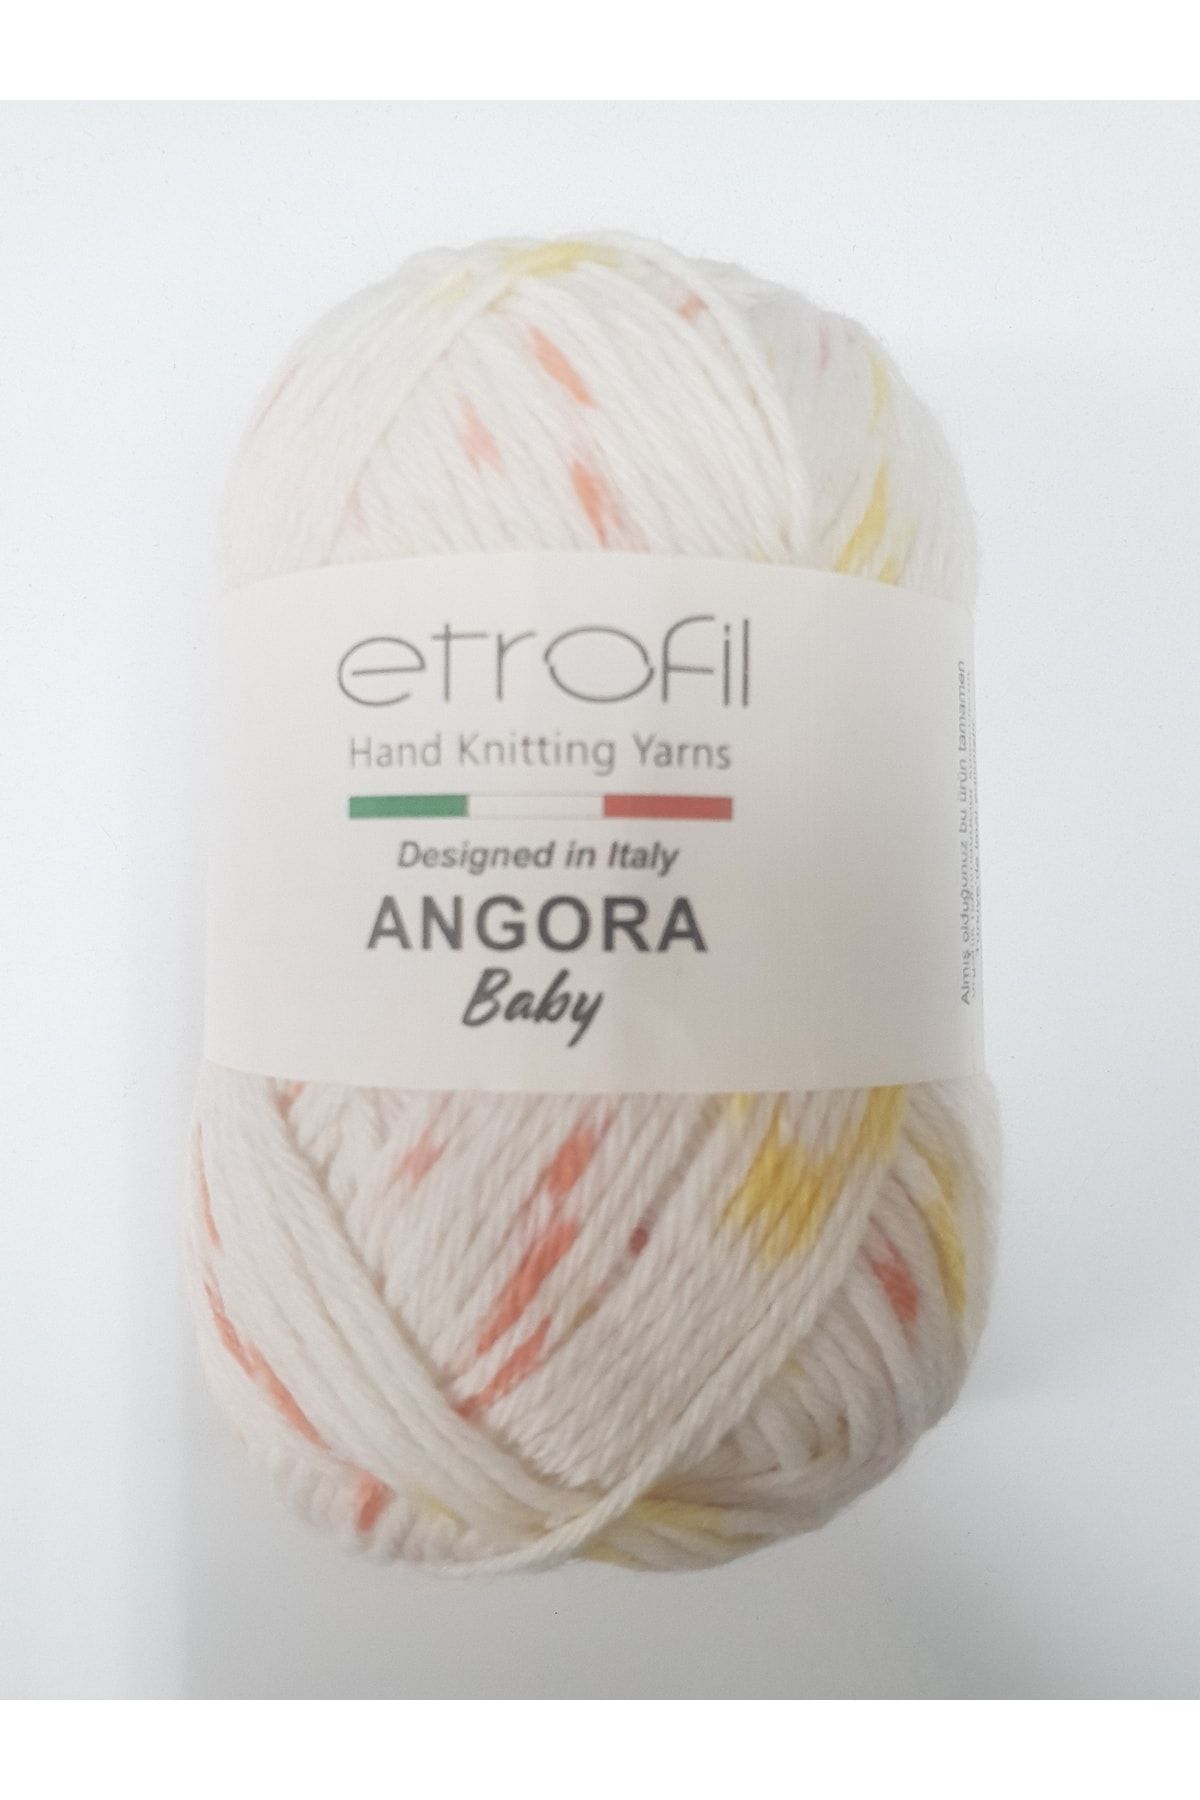 Etrofil Angora Baby